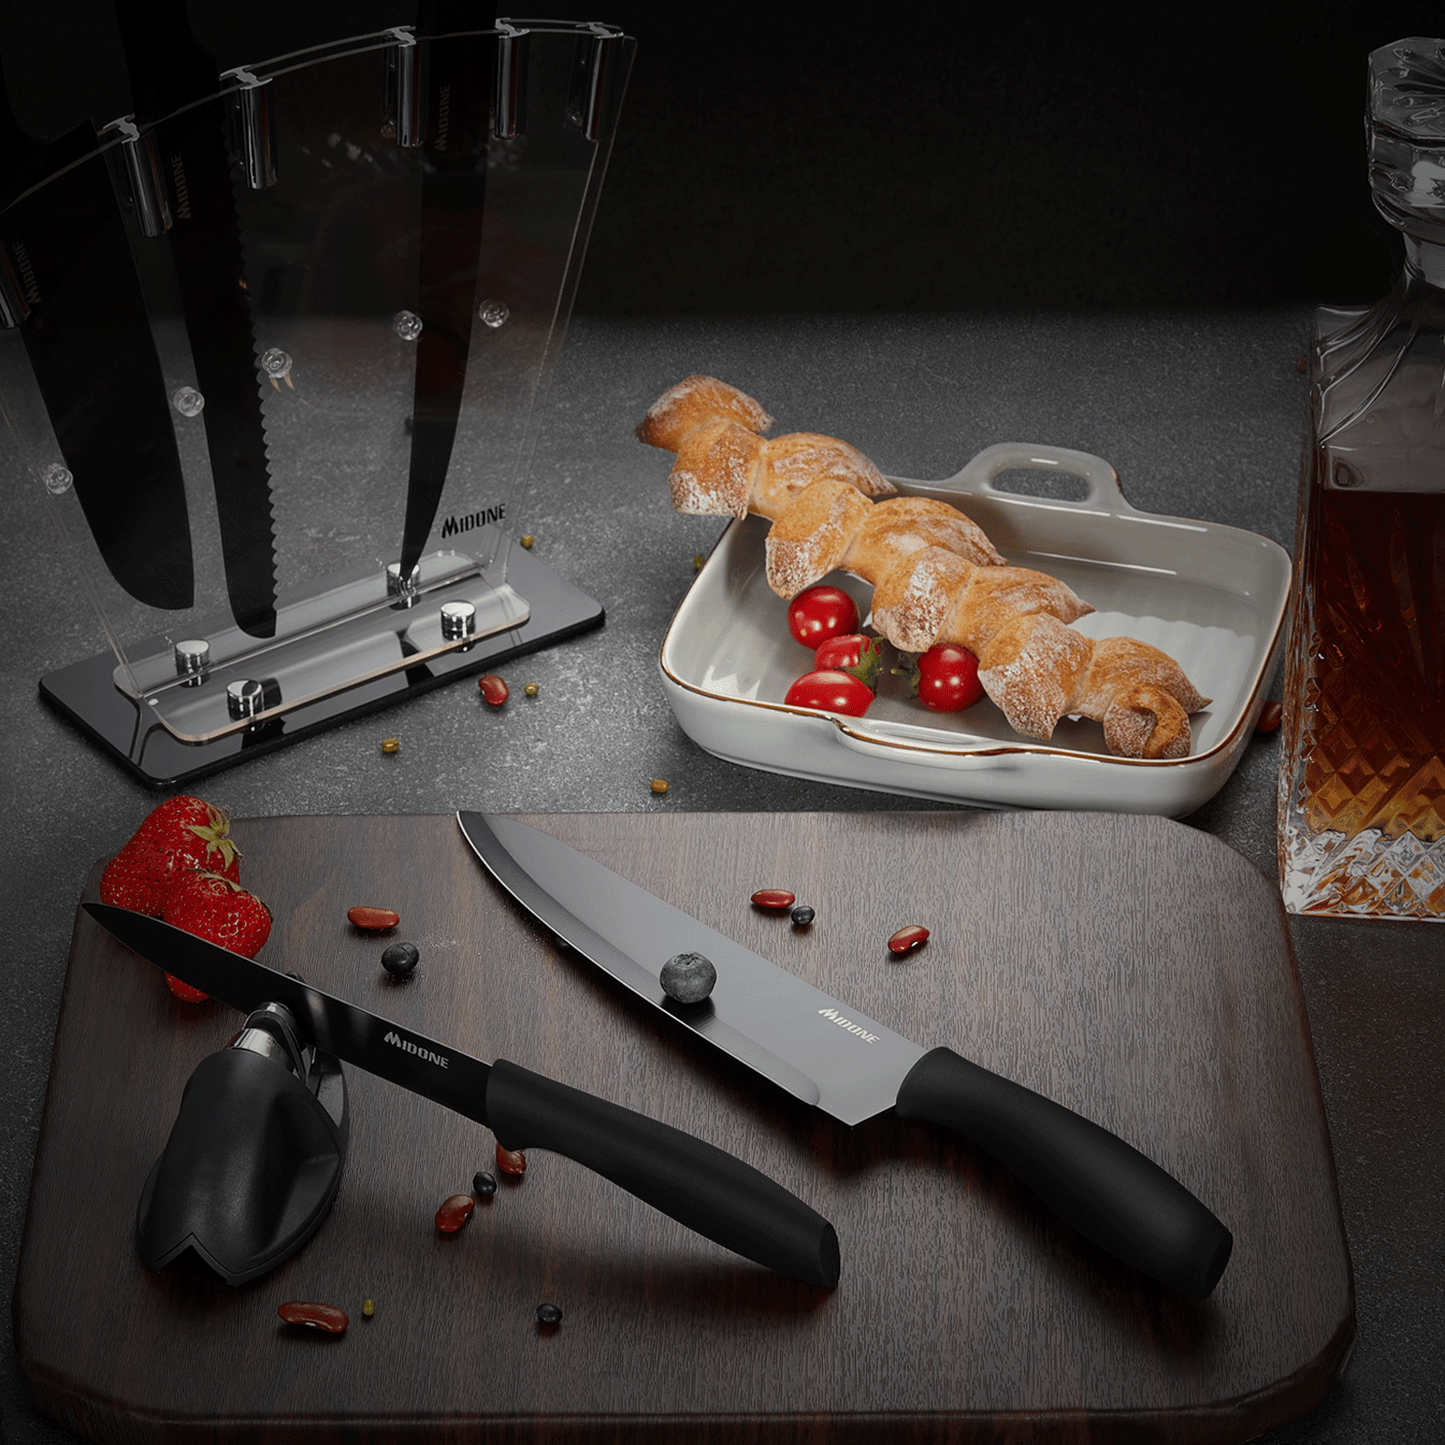  MIDONE Kitchen Knife Set with Acrylic Block, 17 PCS